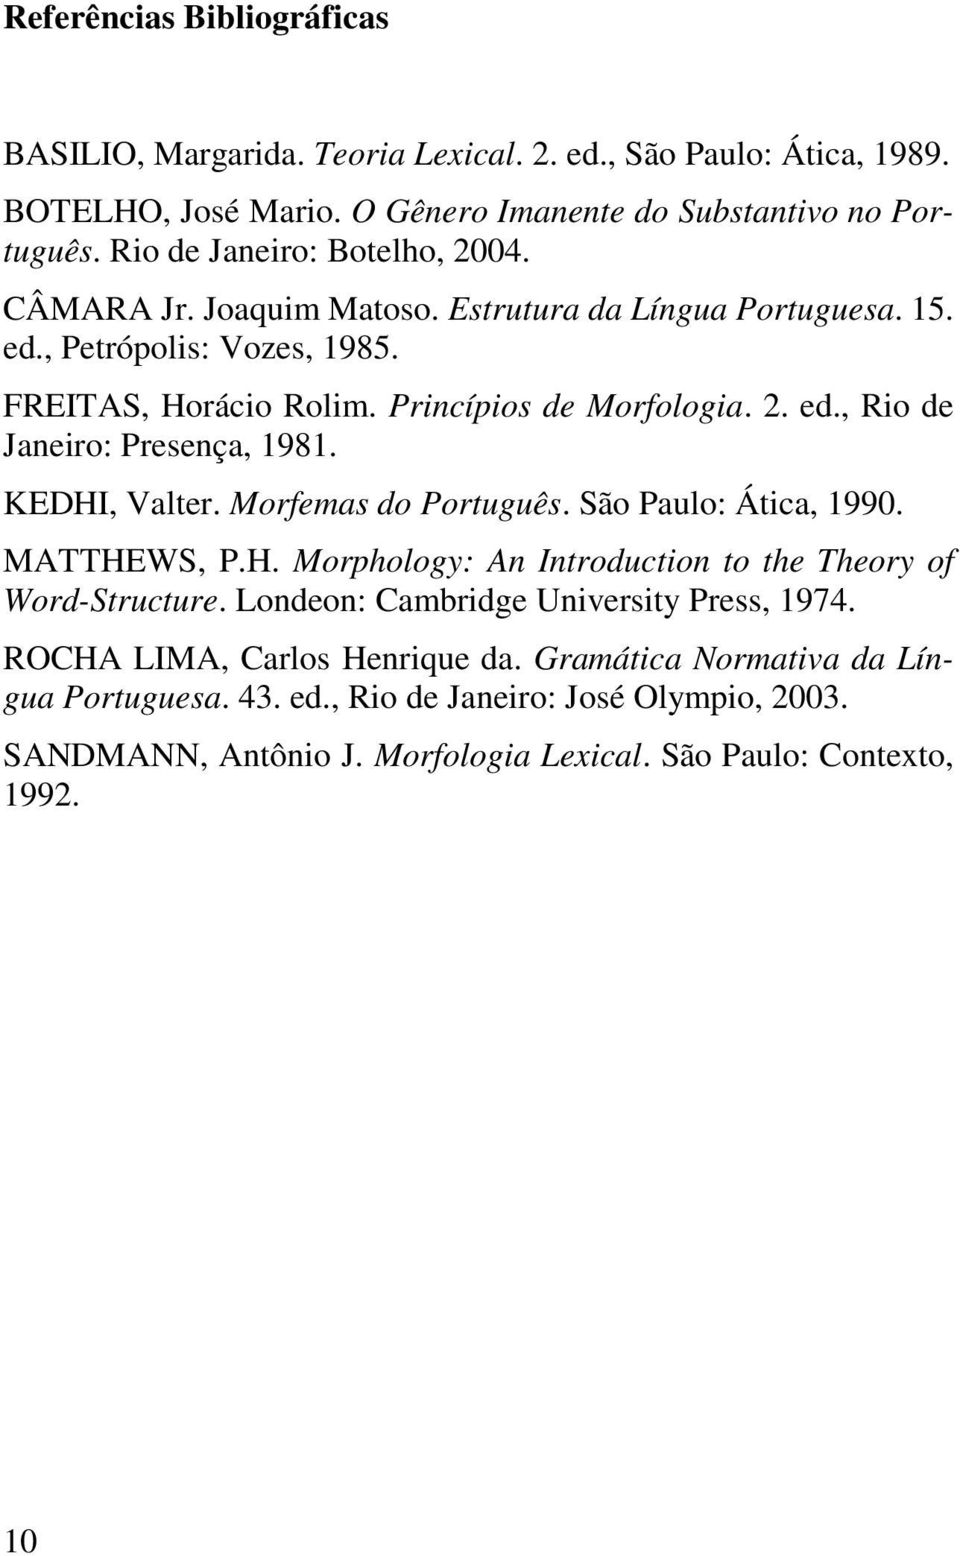 KEDHI, Valter. Morfemas do Português. São Paulo: Ática, 1990. MATTHEWS, P.H. Morphology: An Introduction to the Theory of Word-Structure. Londeon: Cambridge University Press, 1974.